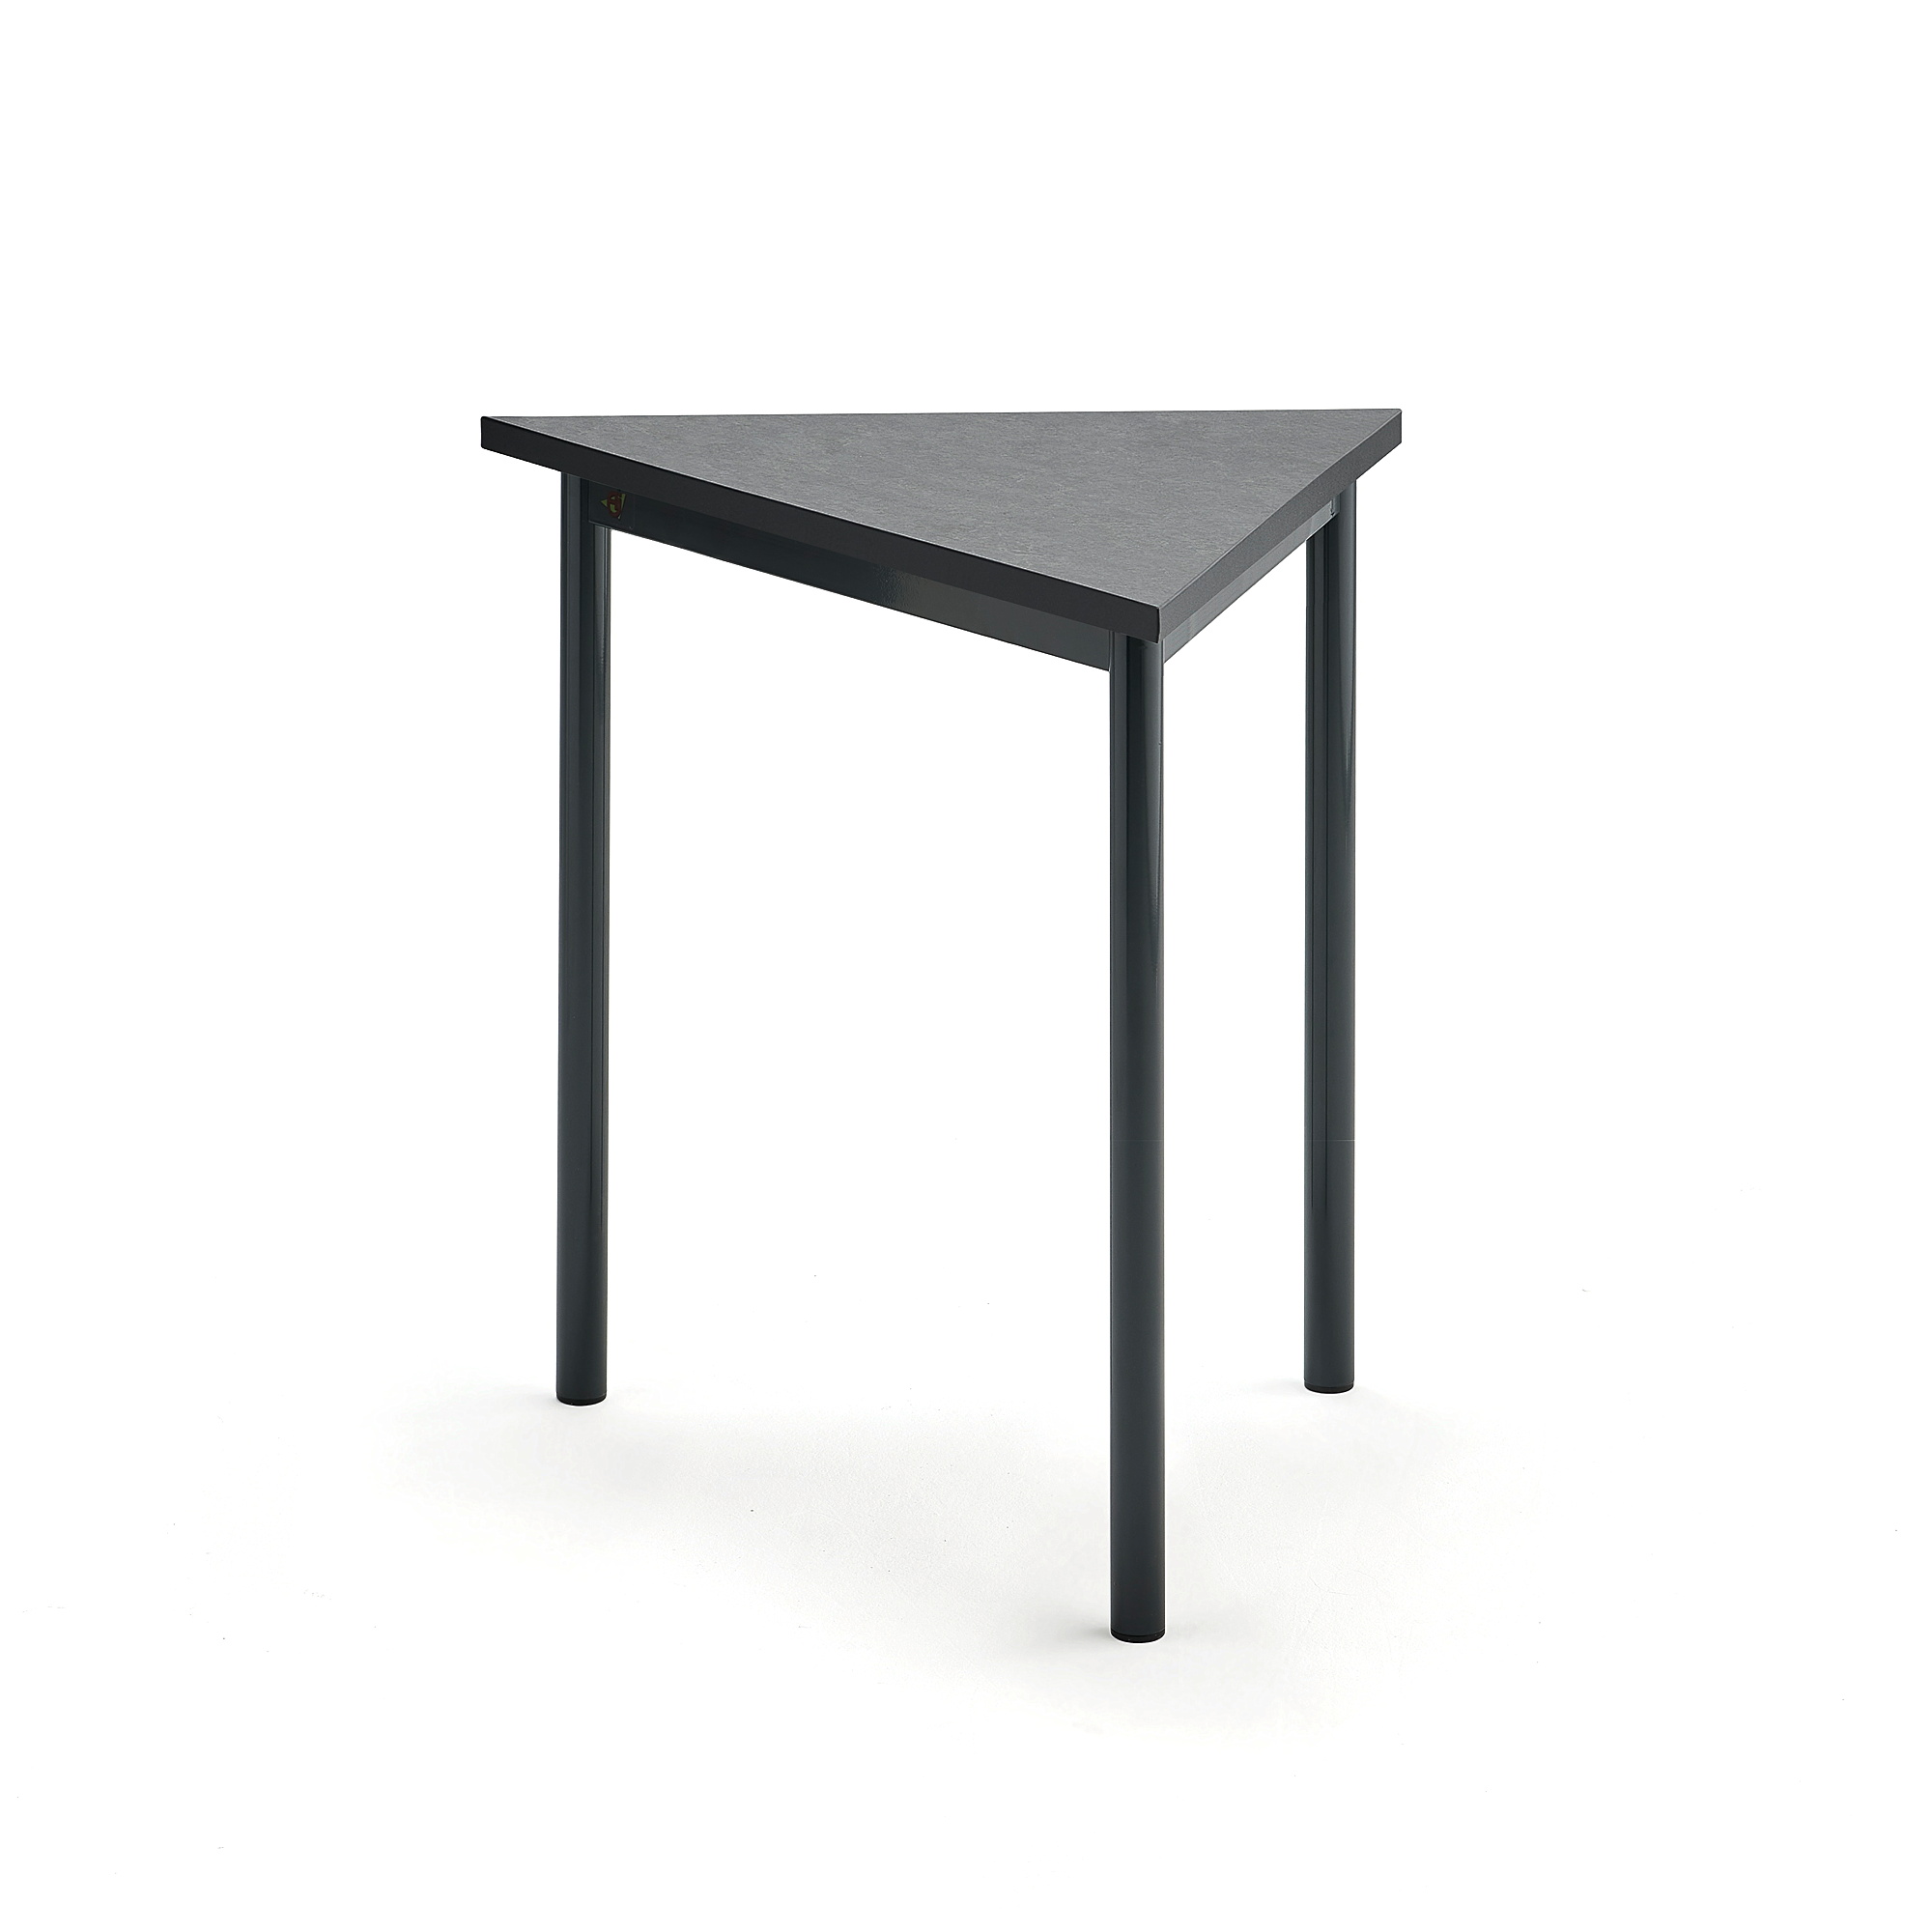 Stůl SONITUS TRIANGEL, 800x700x720 mm, antracitově šedé nohy, deska s linoleem, tmavě šedá